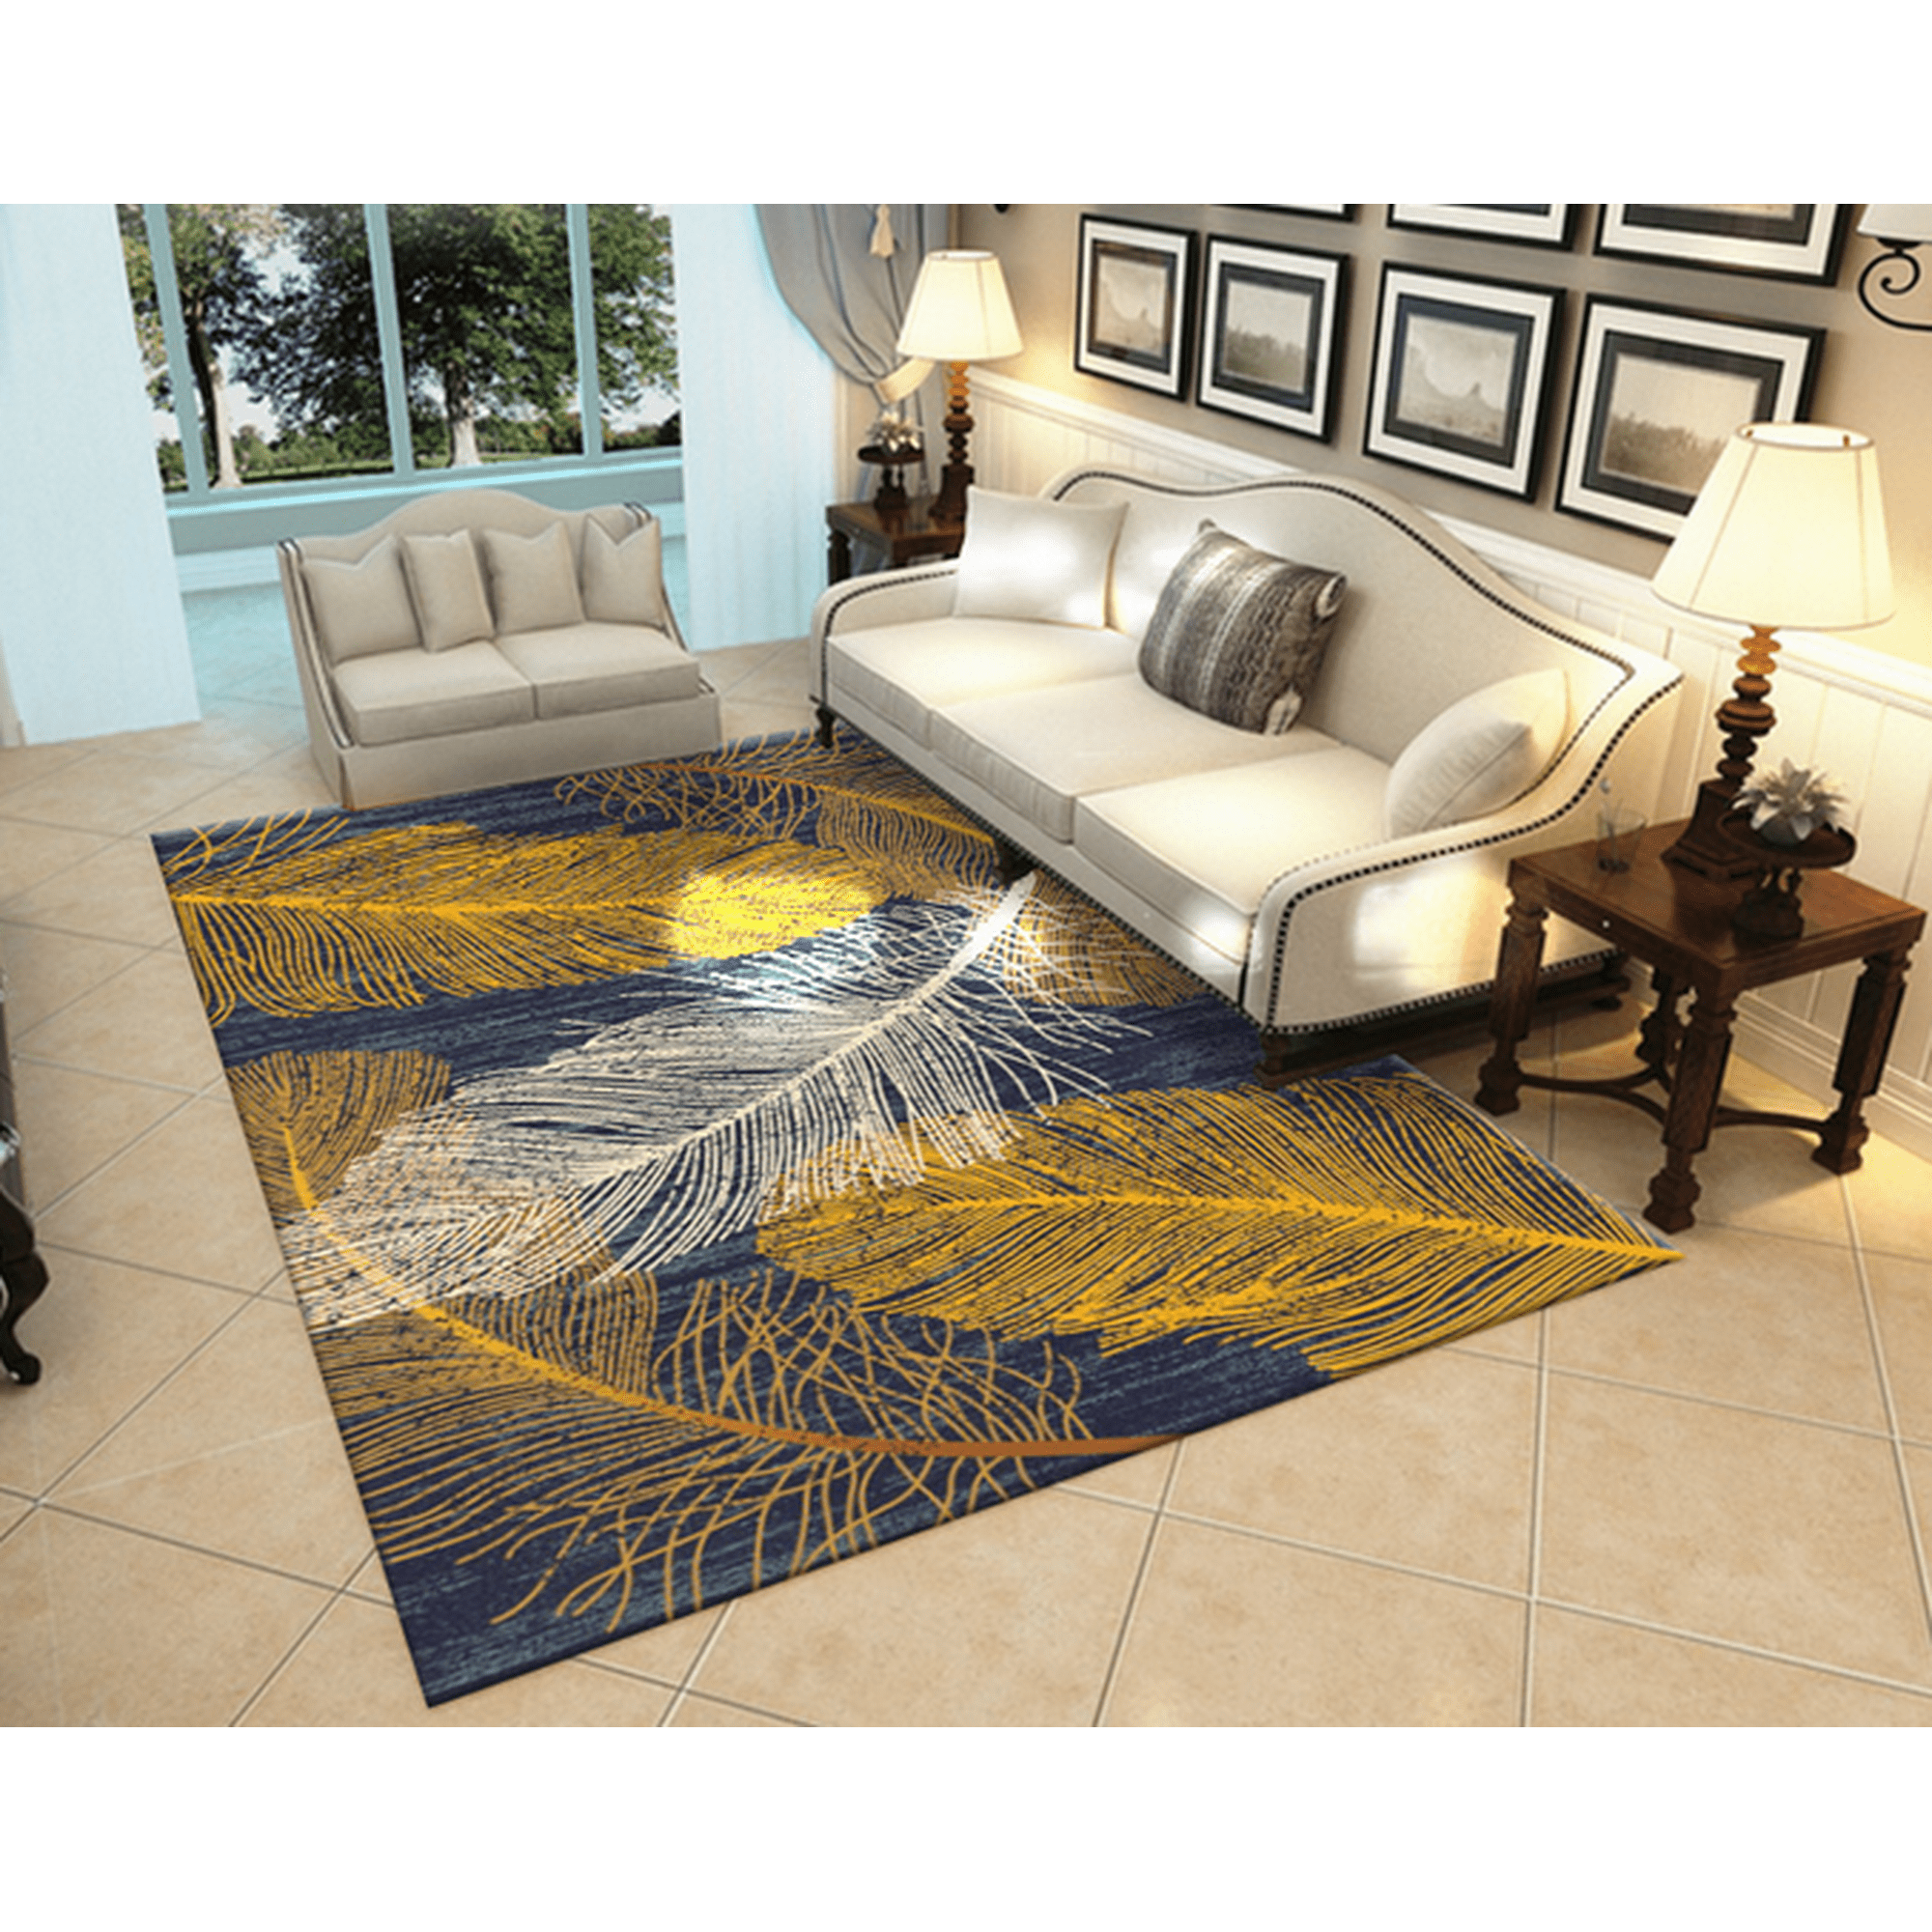 4 Sizes Leaf Printed Floor Carpet Soft Area Rug Non Slip Mat For Home Living Room Bedroom Decor Walmart Canada